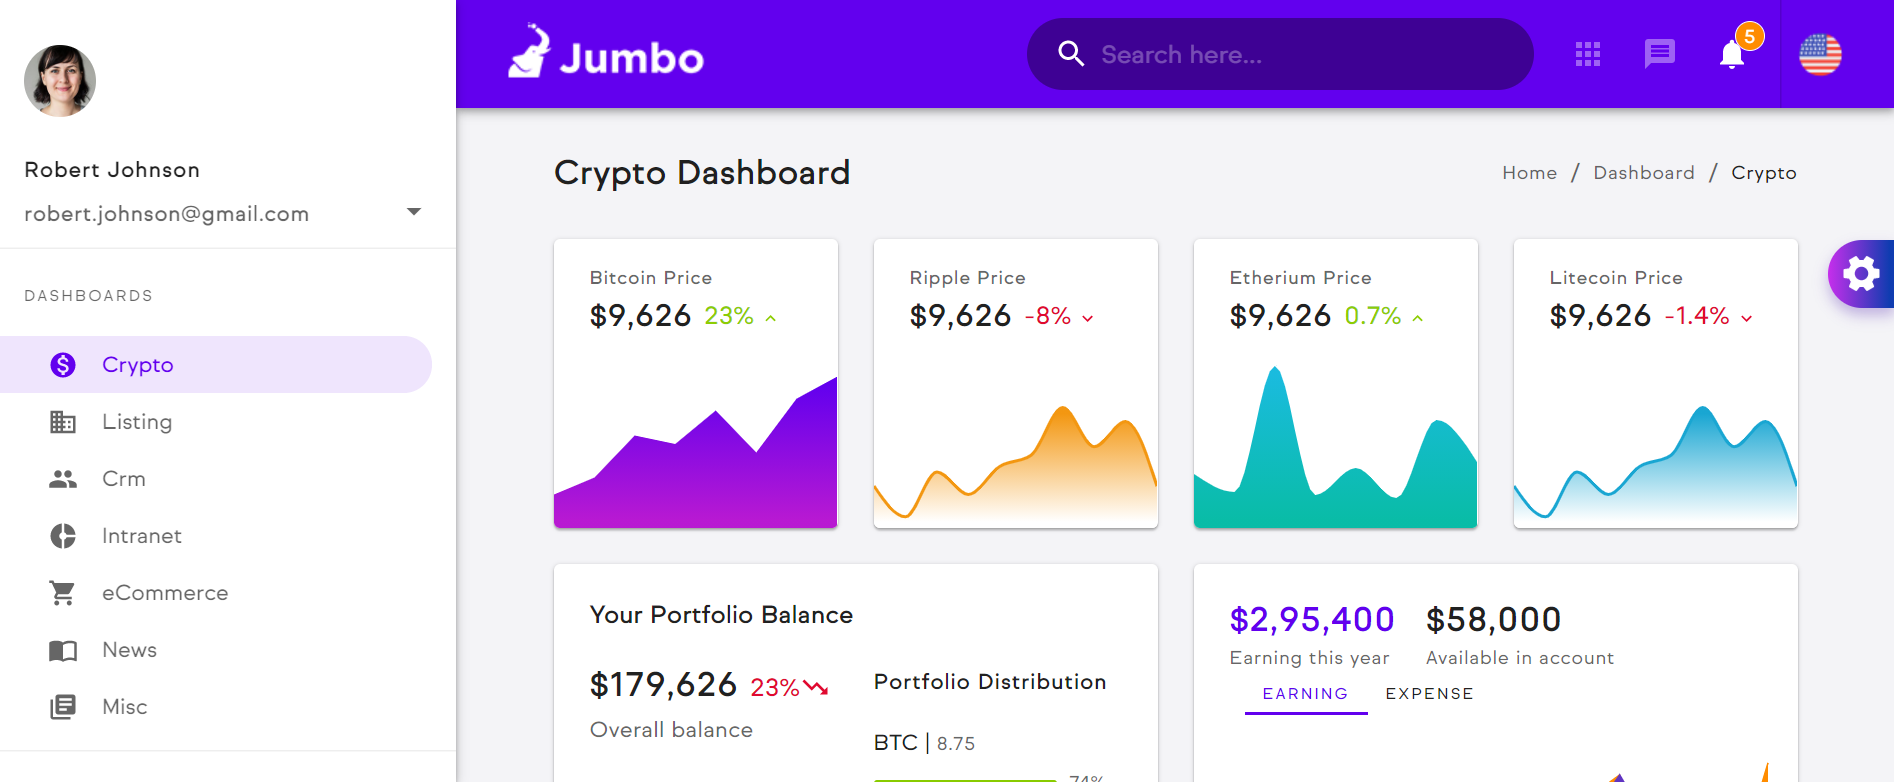 Jumbo-Admin-Dashboard.png